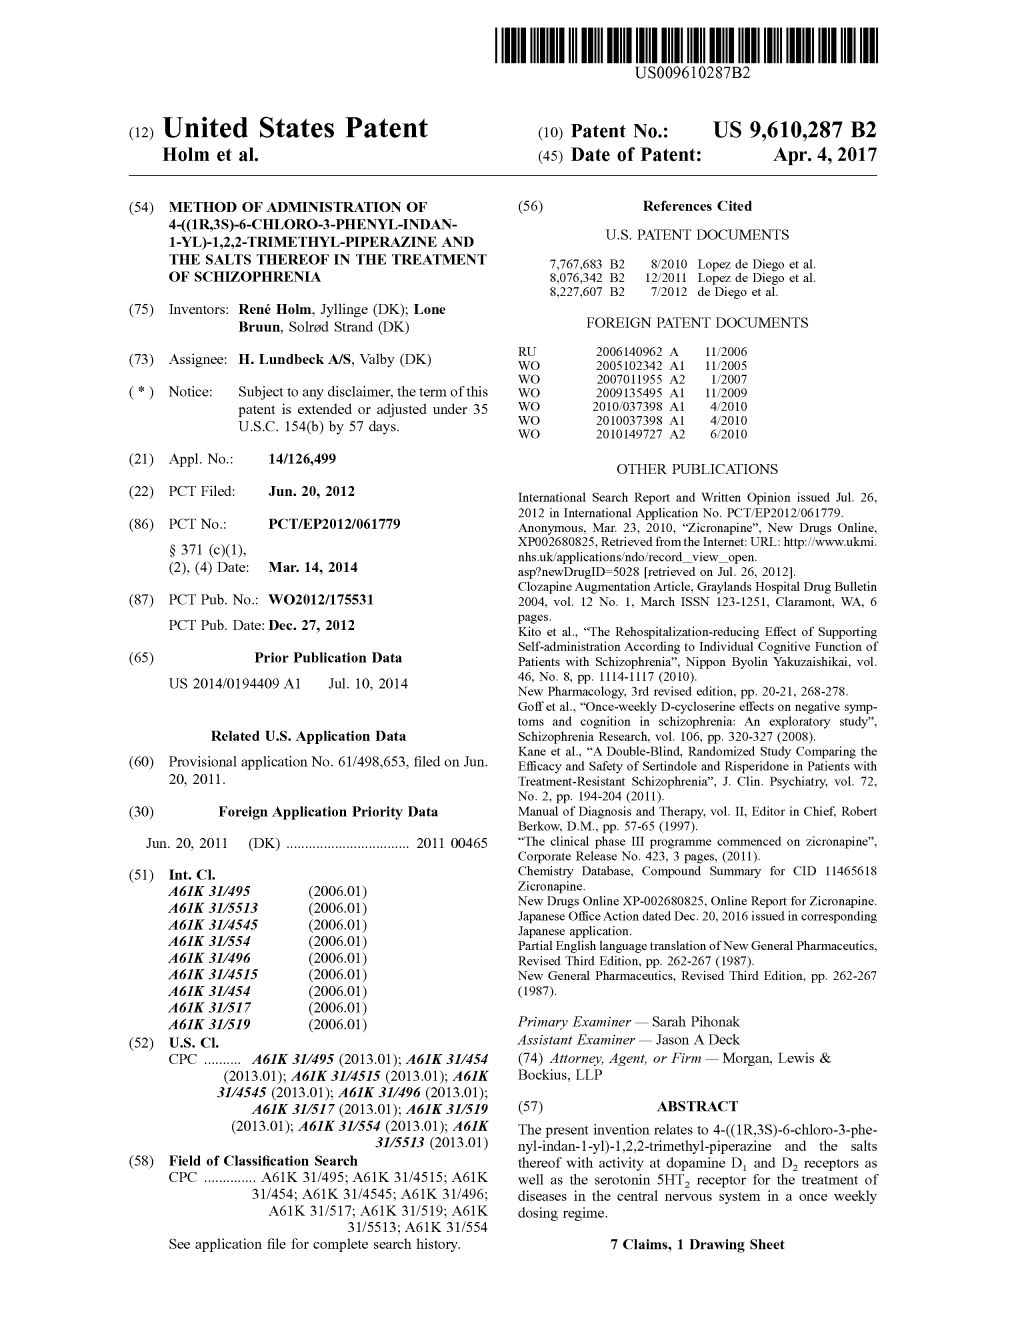 (12) United States Patent (10) Patent No.: US 9,610,287 B2 Holm Et Al